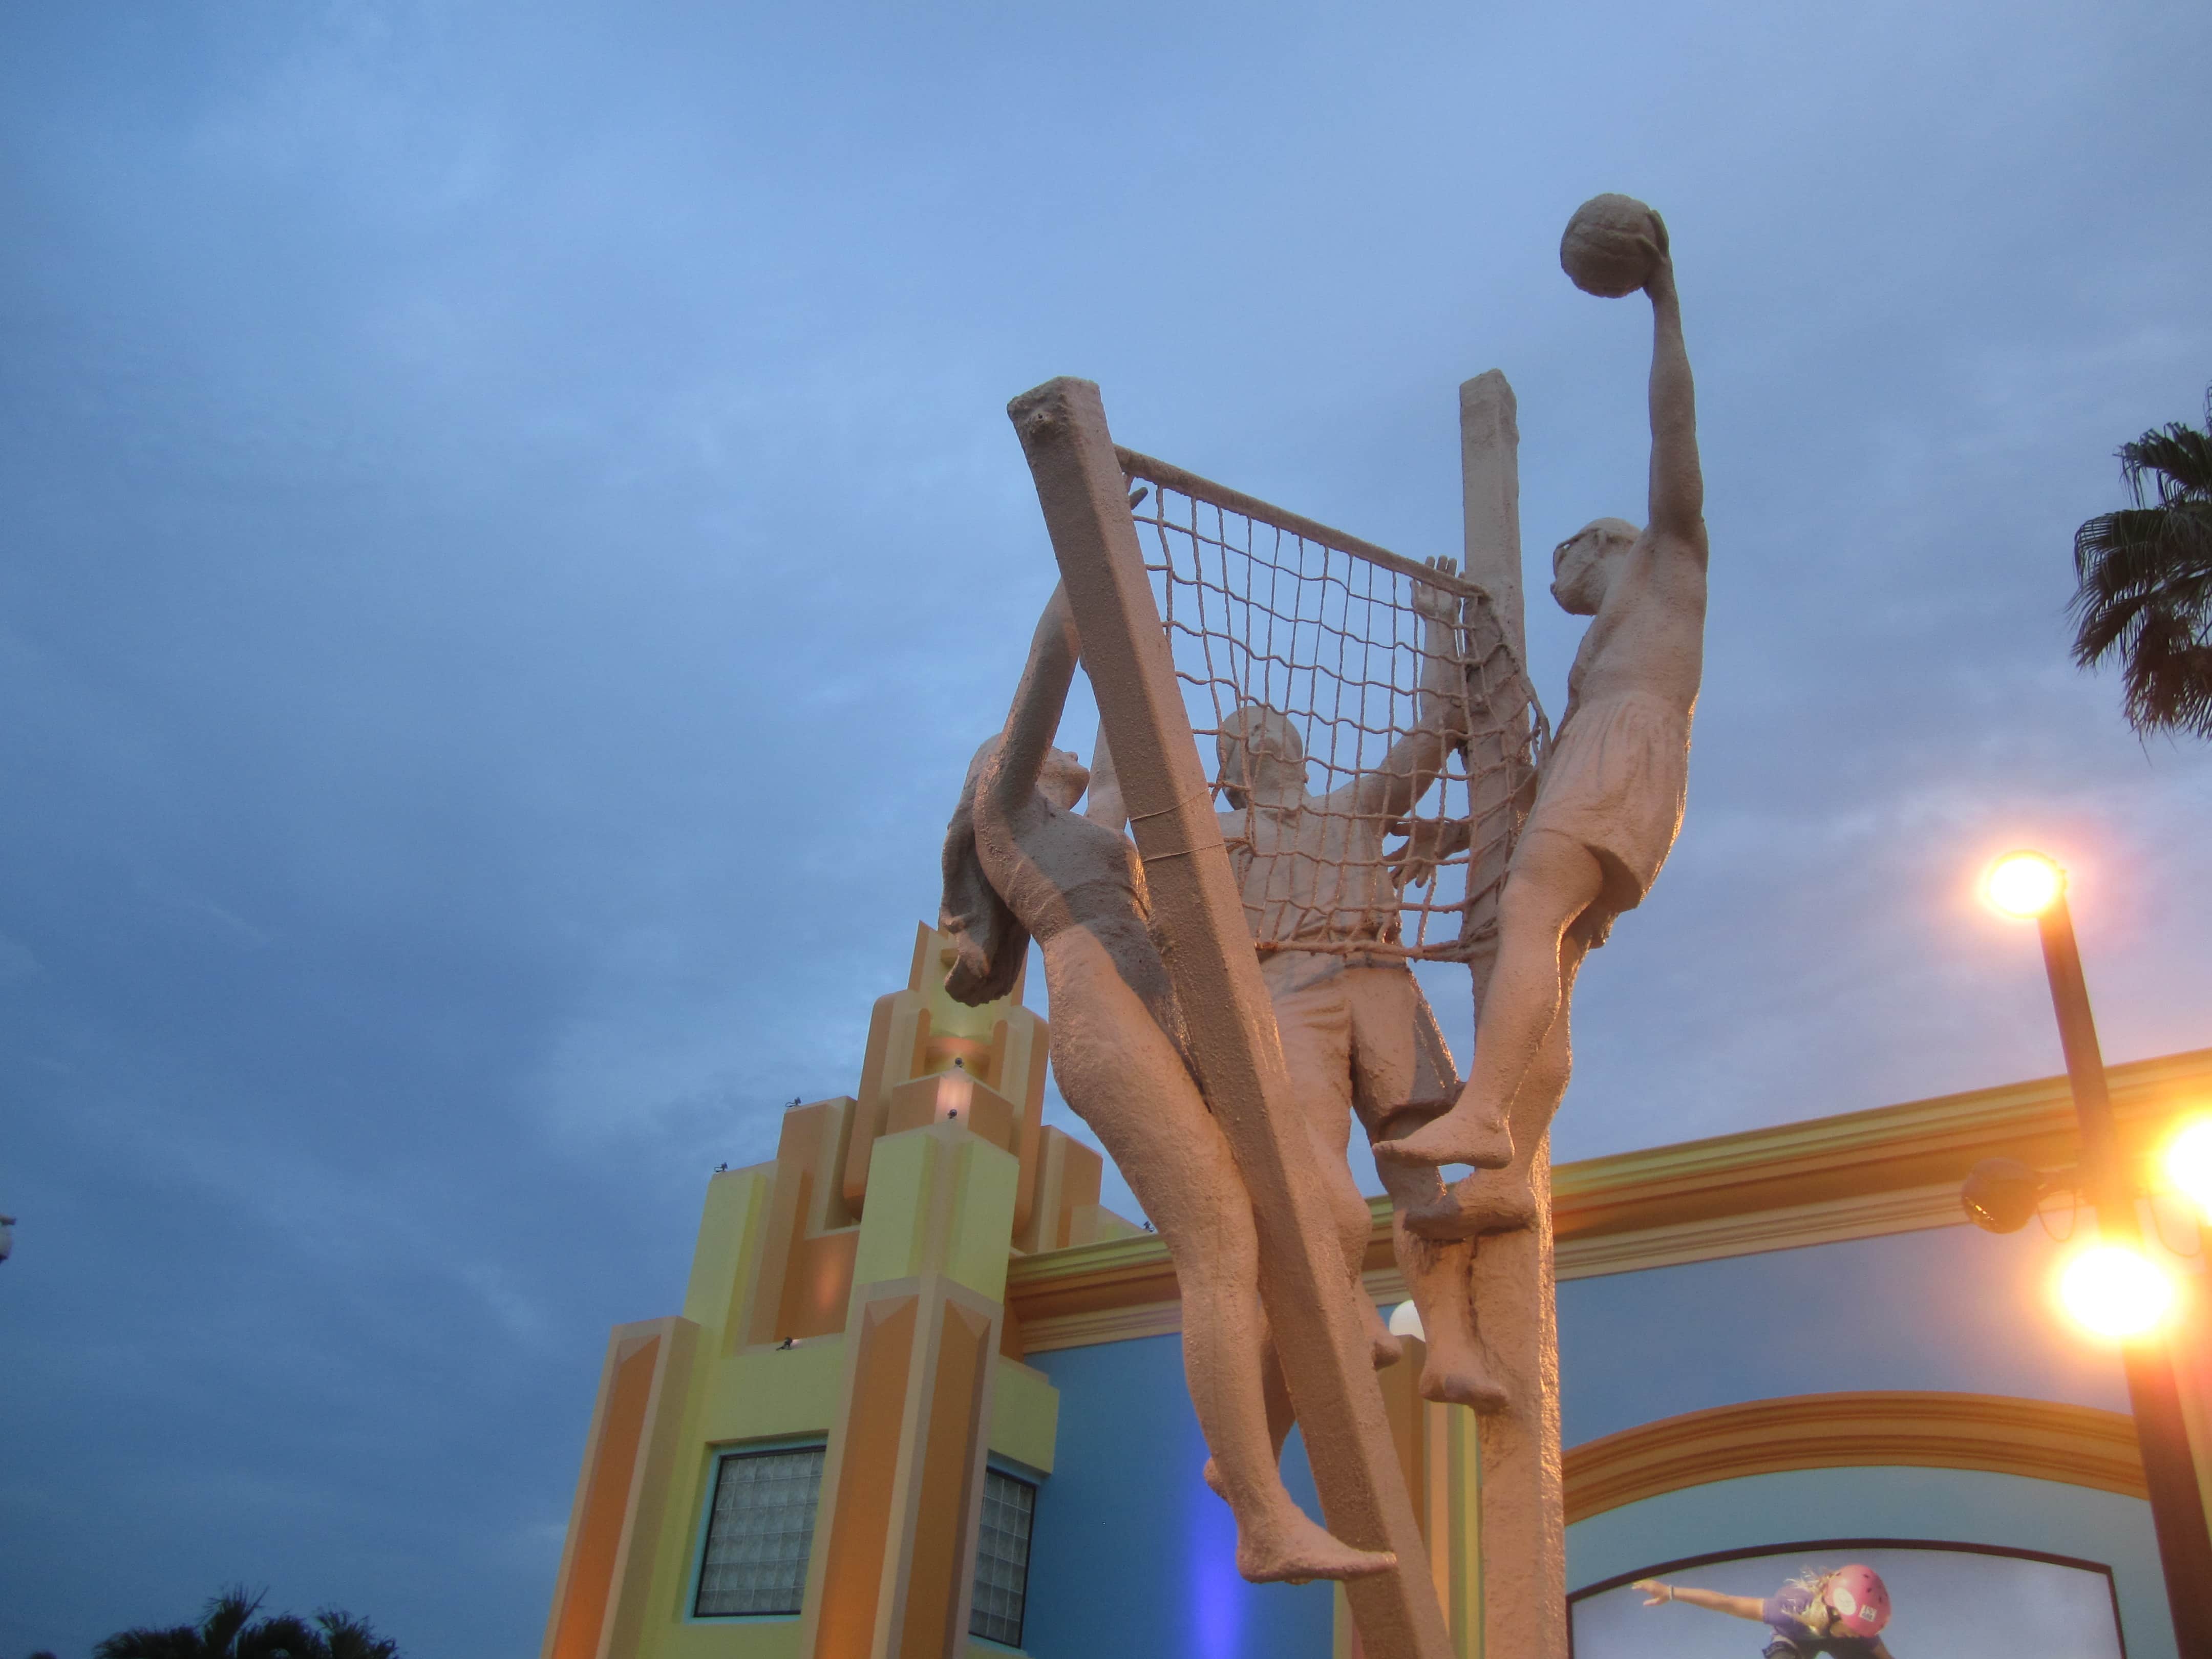 Volleyball game statue in Cocoa Beach, Florida